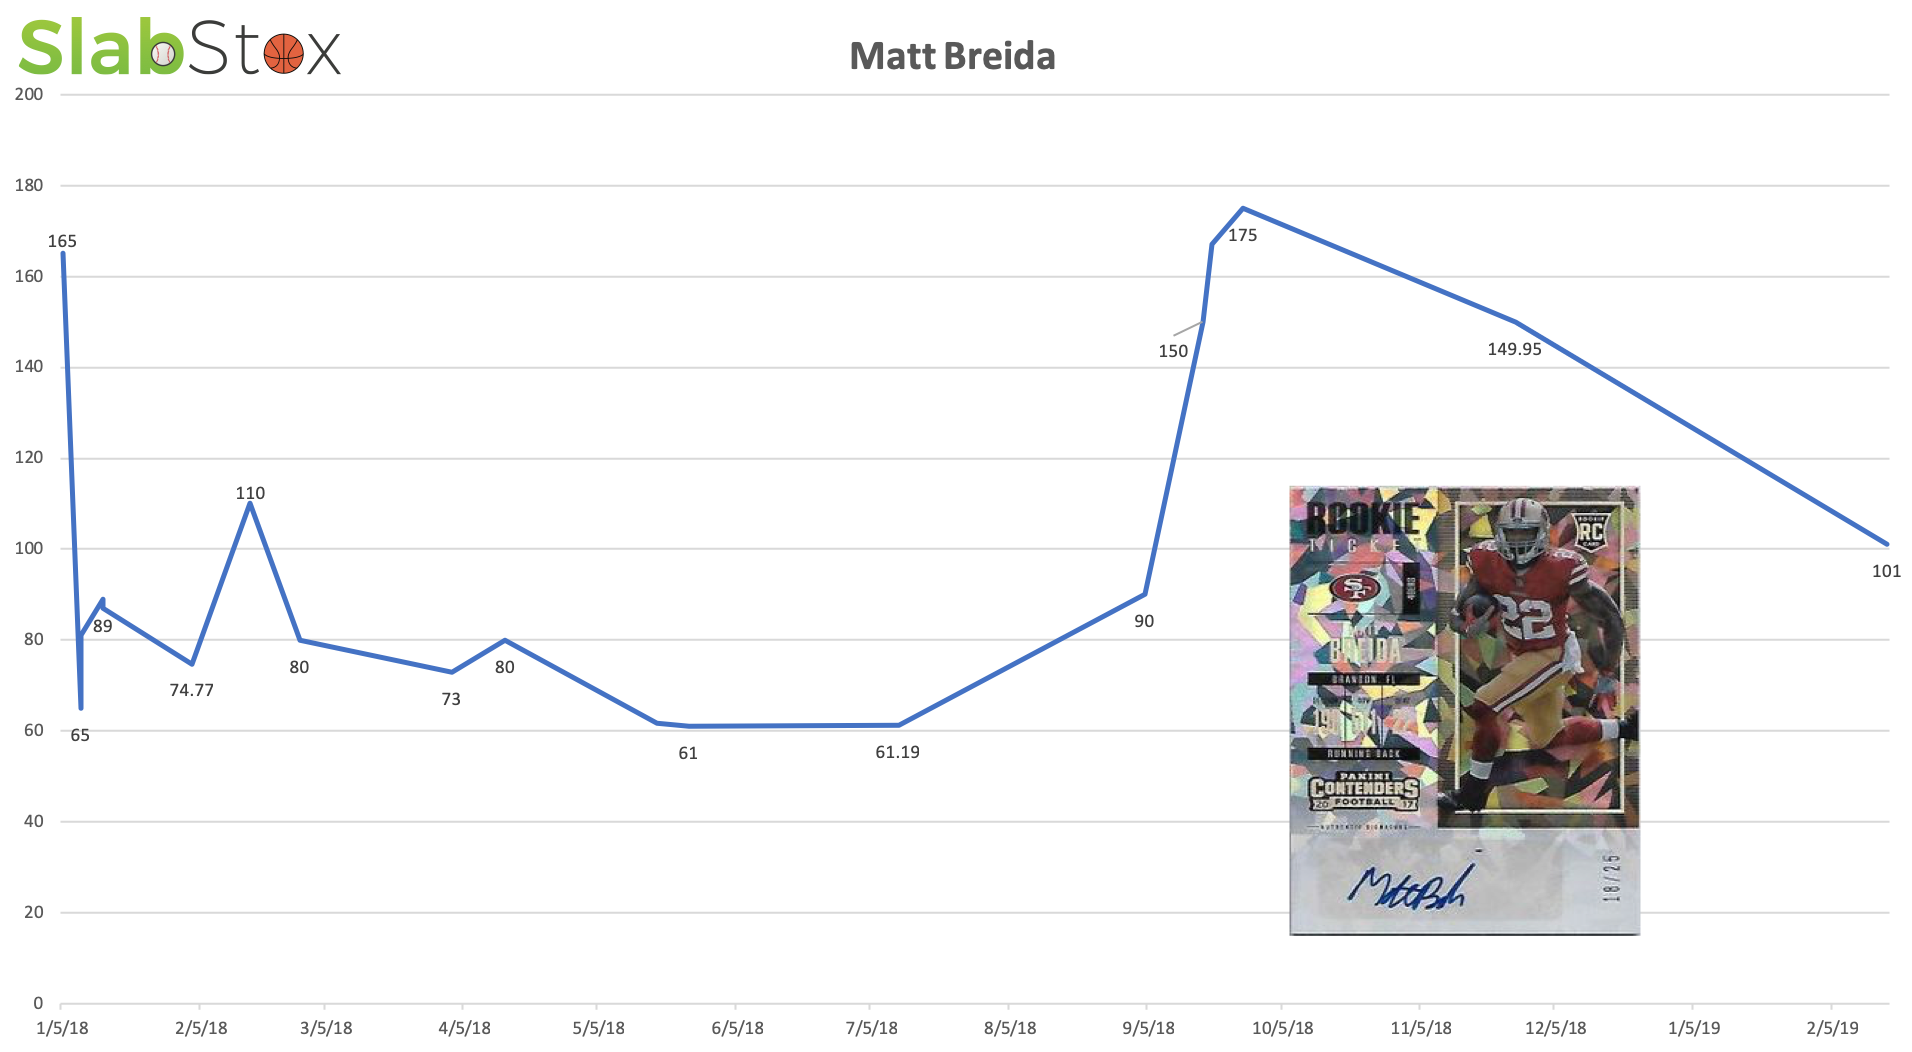 SlabStox graphic for Matt Breida rookie card